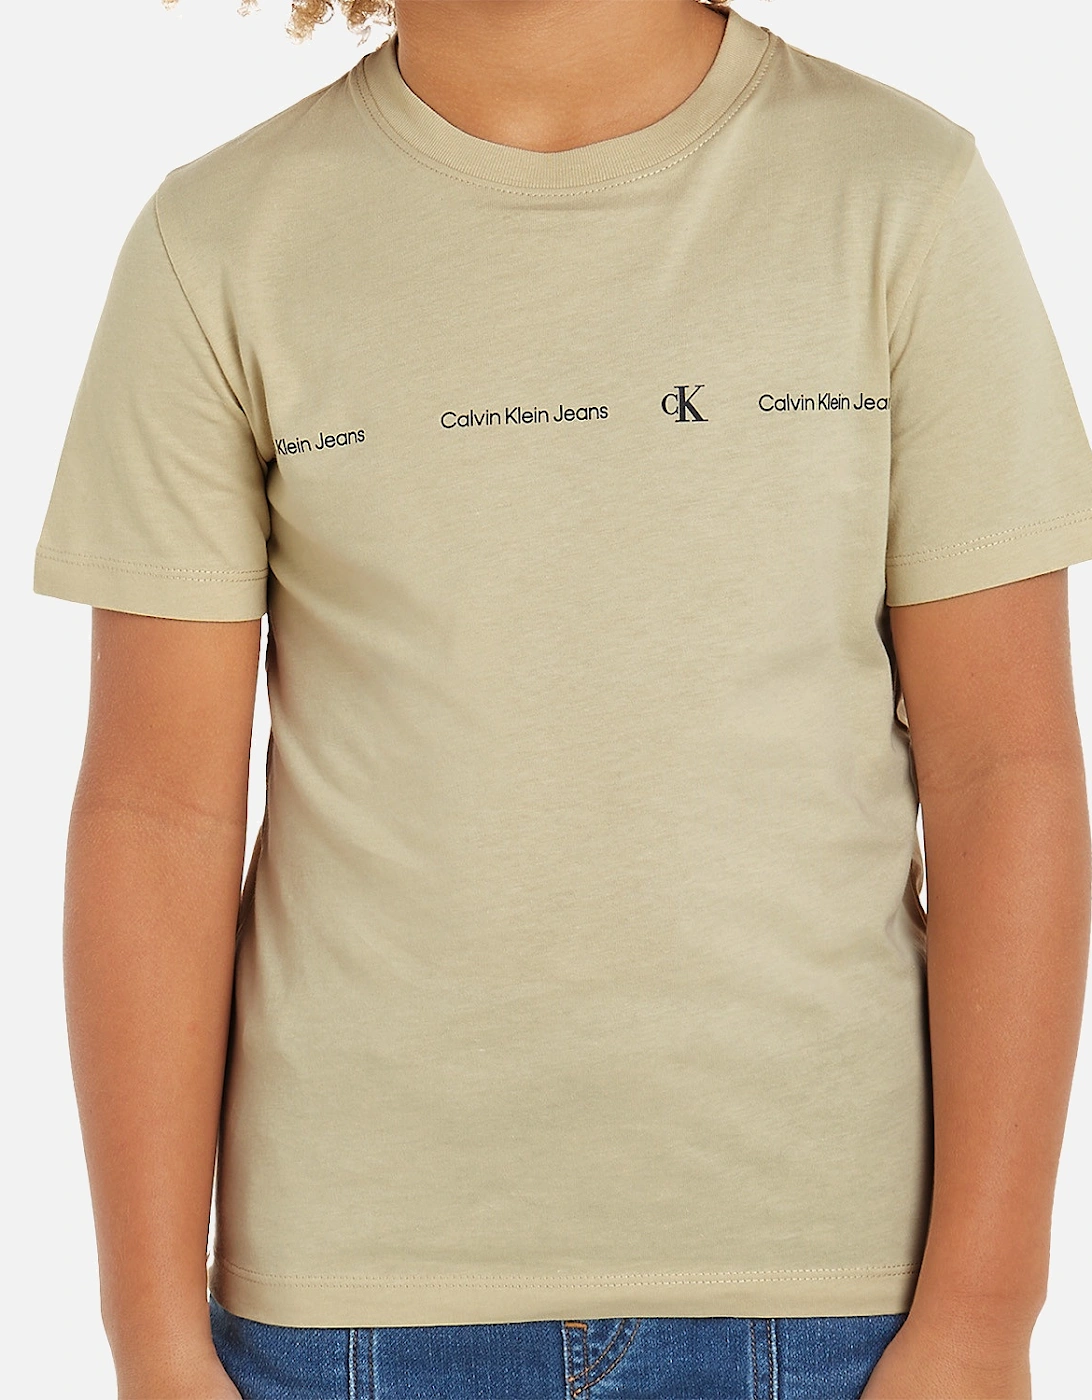 Juniors Minimalistic T-Shirt (Kohlrabi Green)